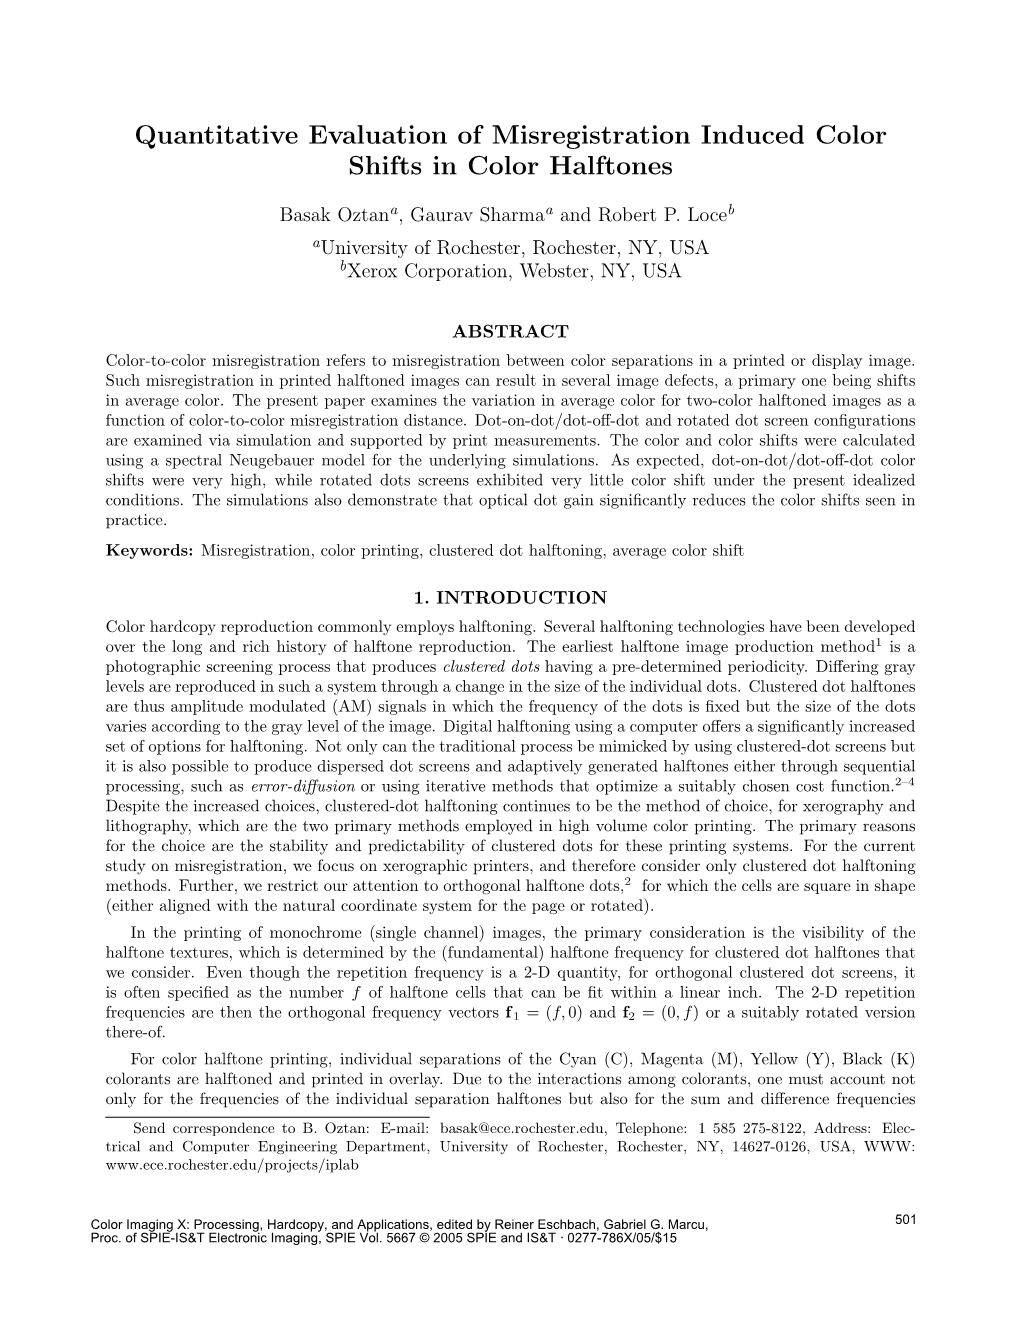 Quantitative Evaluation of Misregistration-Induced Color Shifts